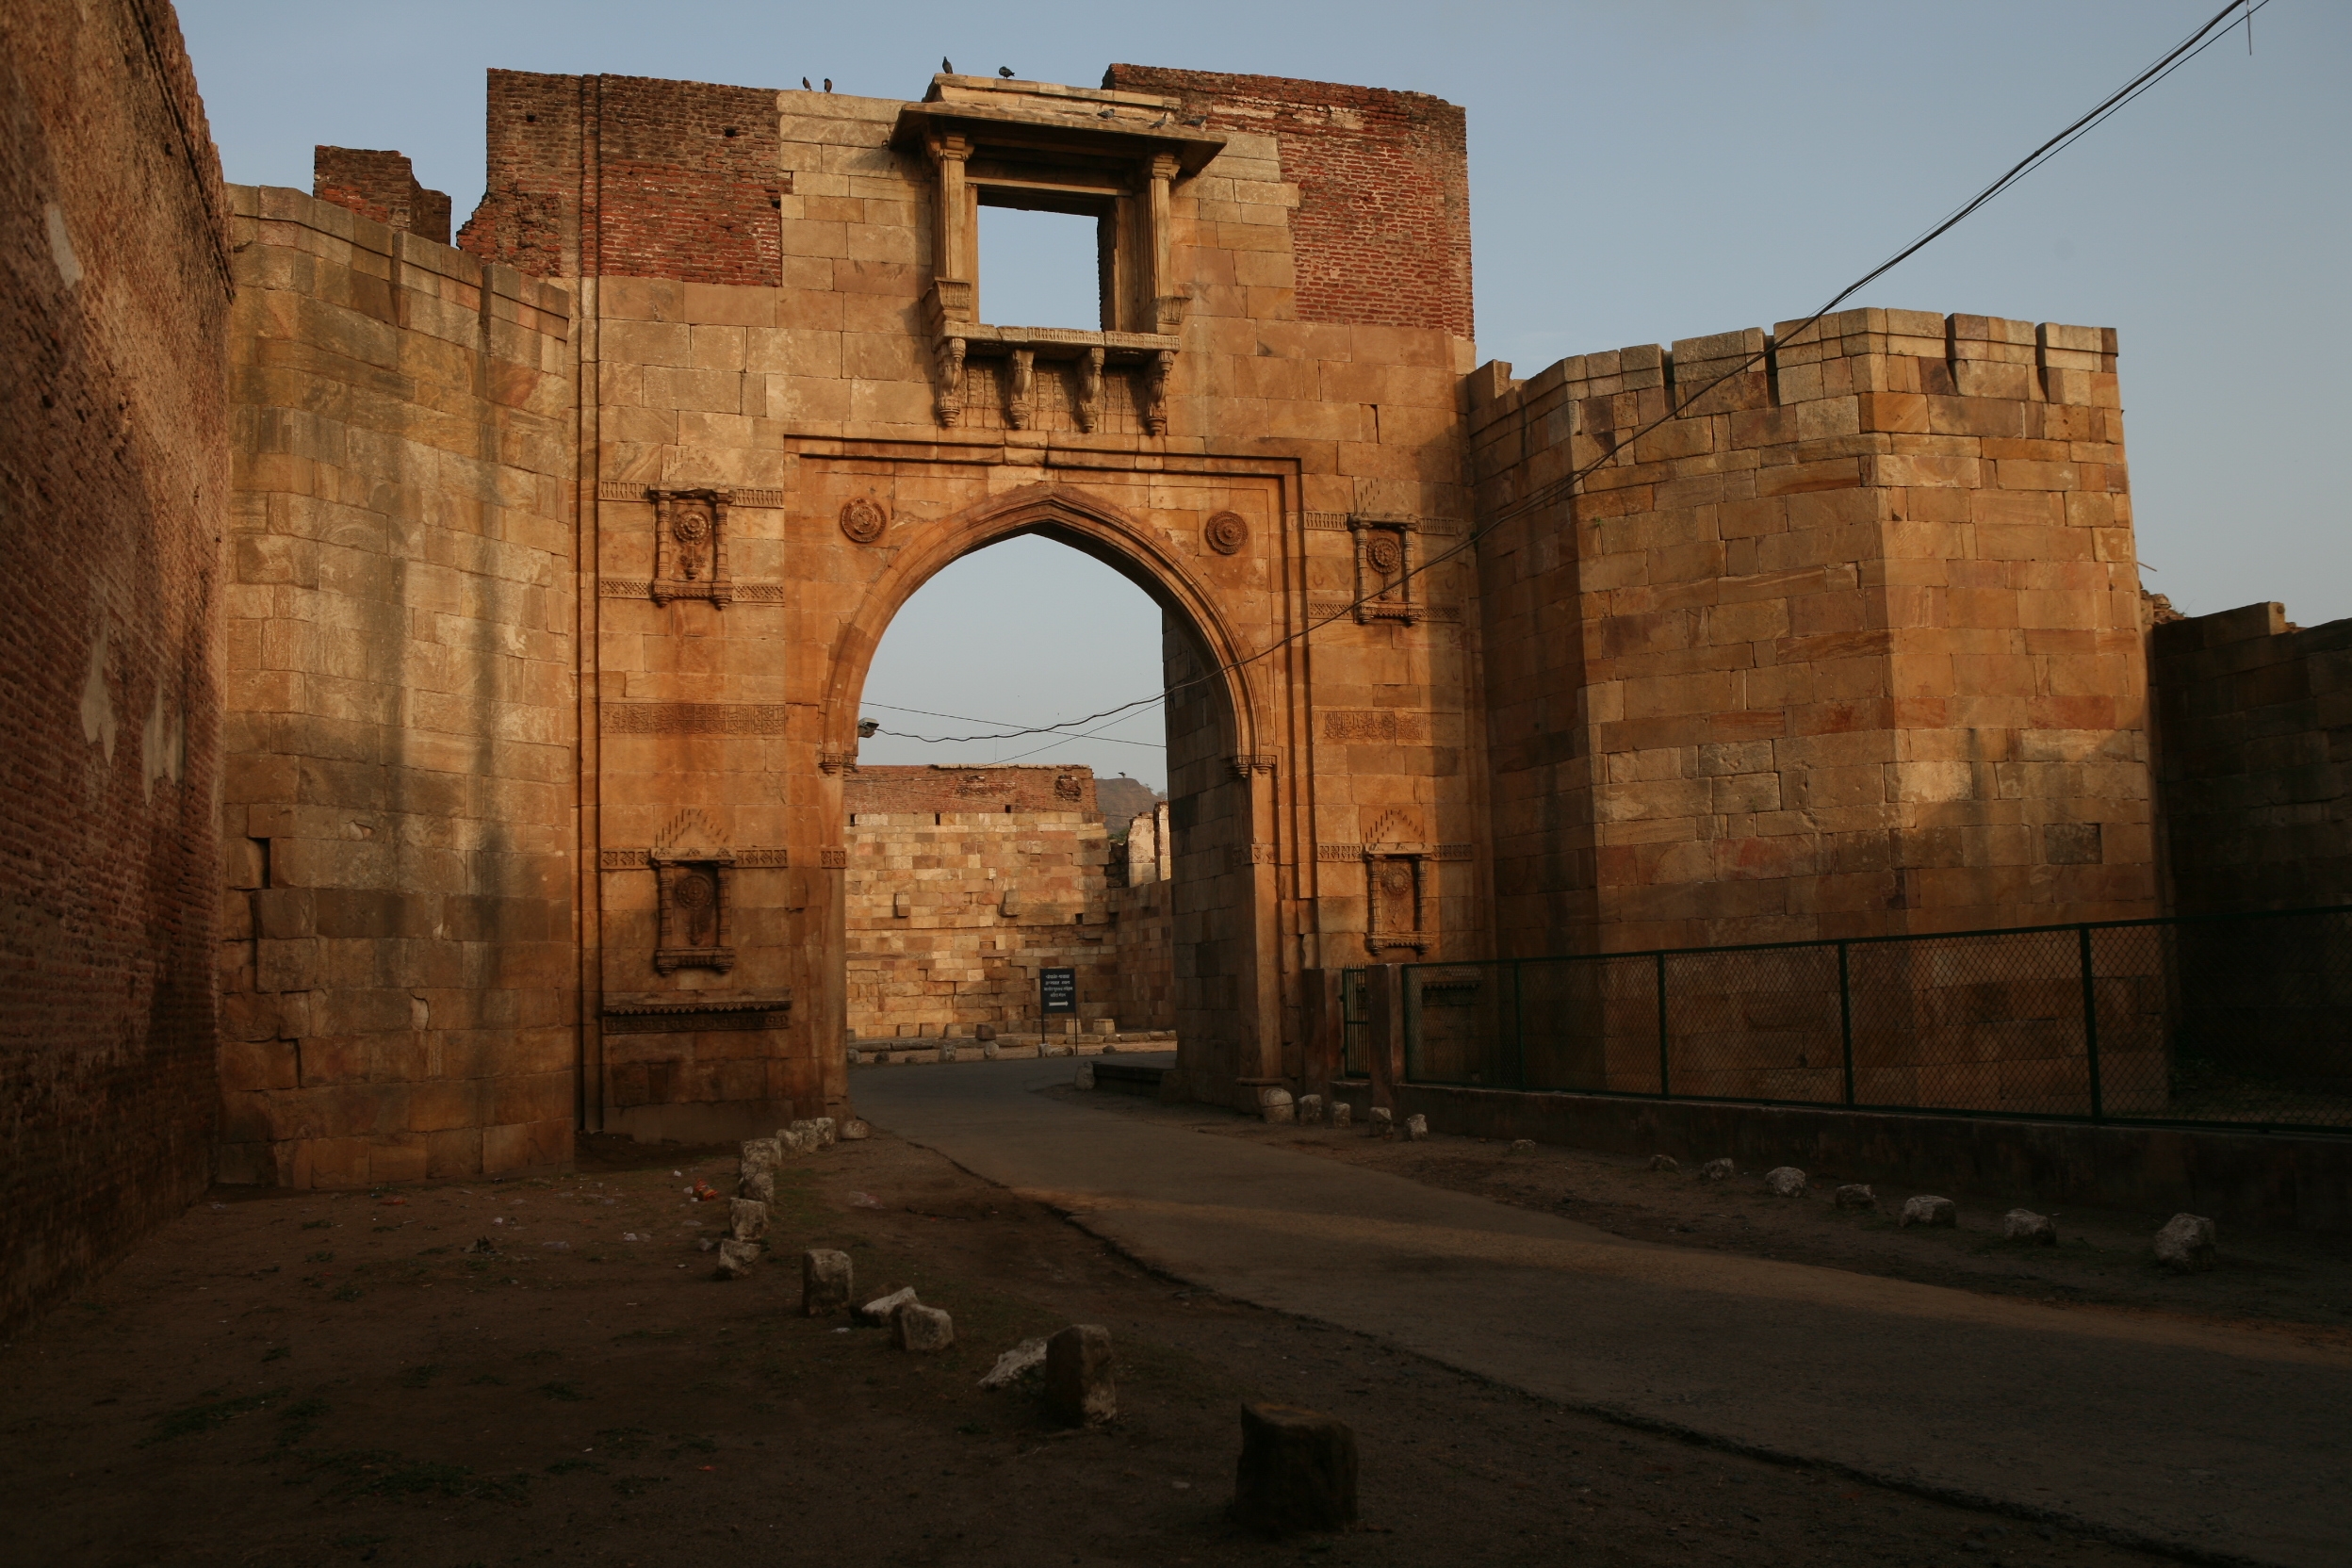 File:City Gate of old Champaner city.jpg - Wikimedia Commons